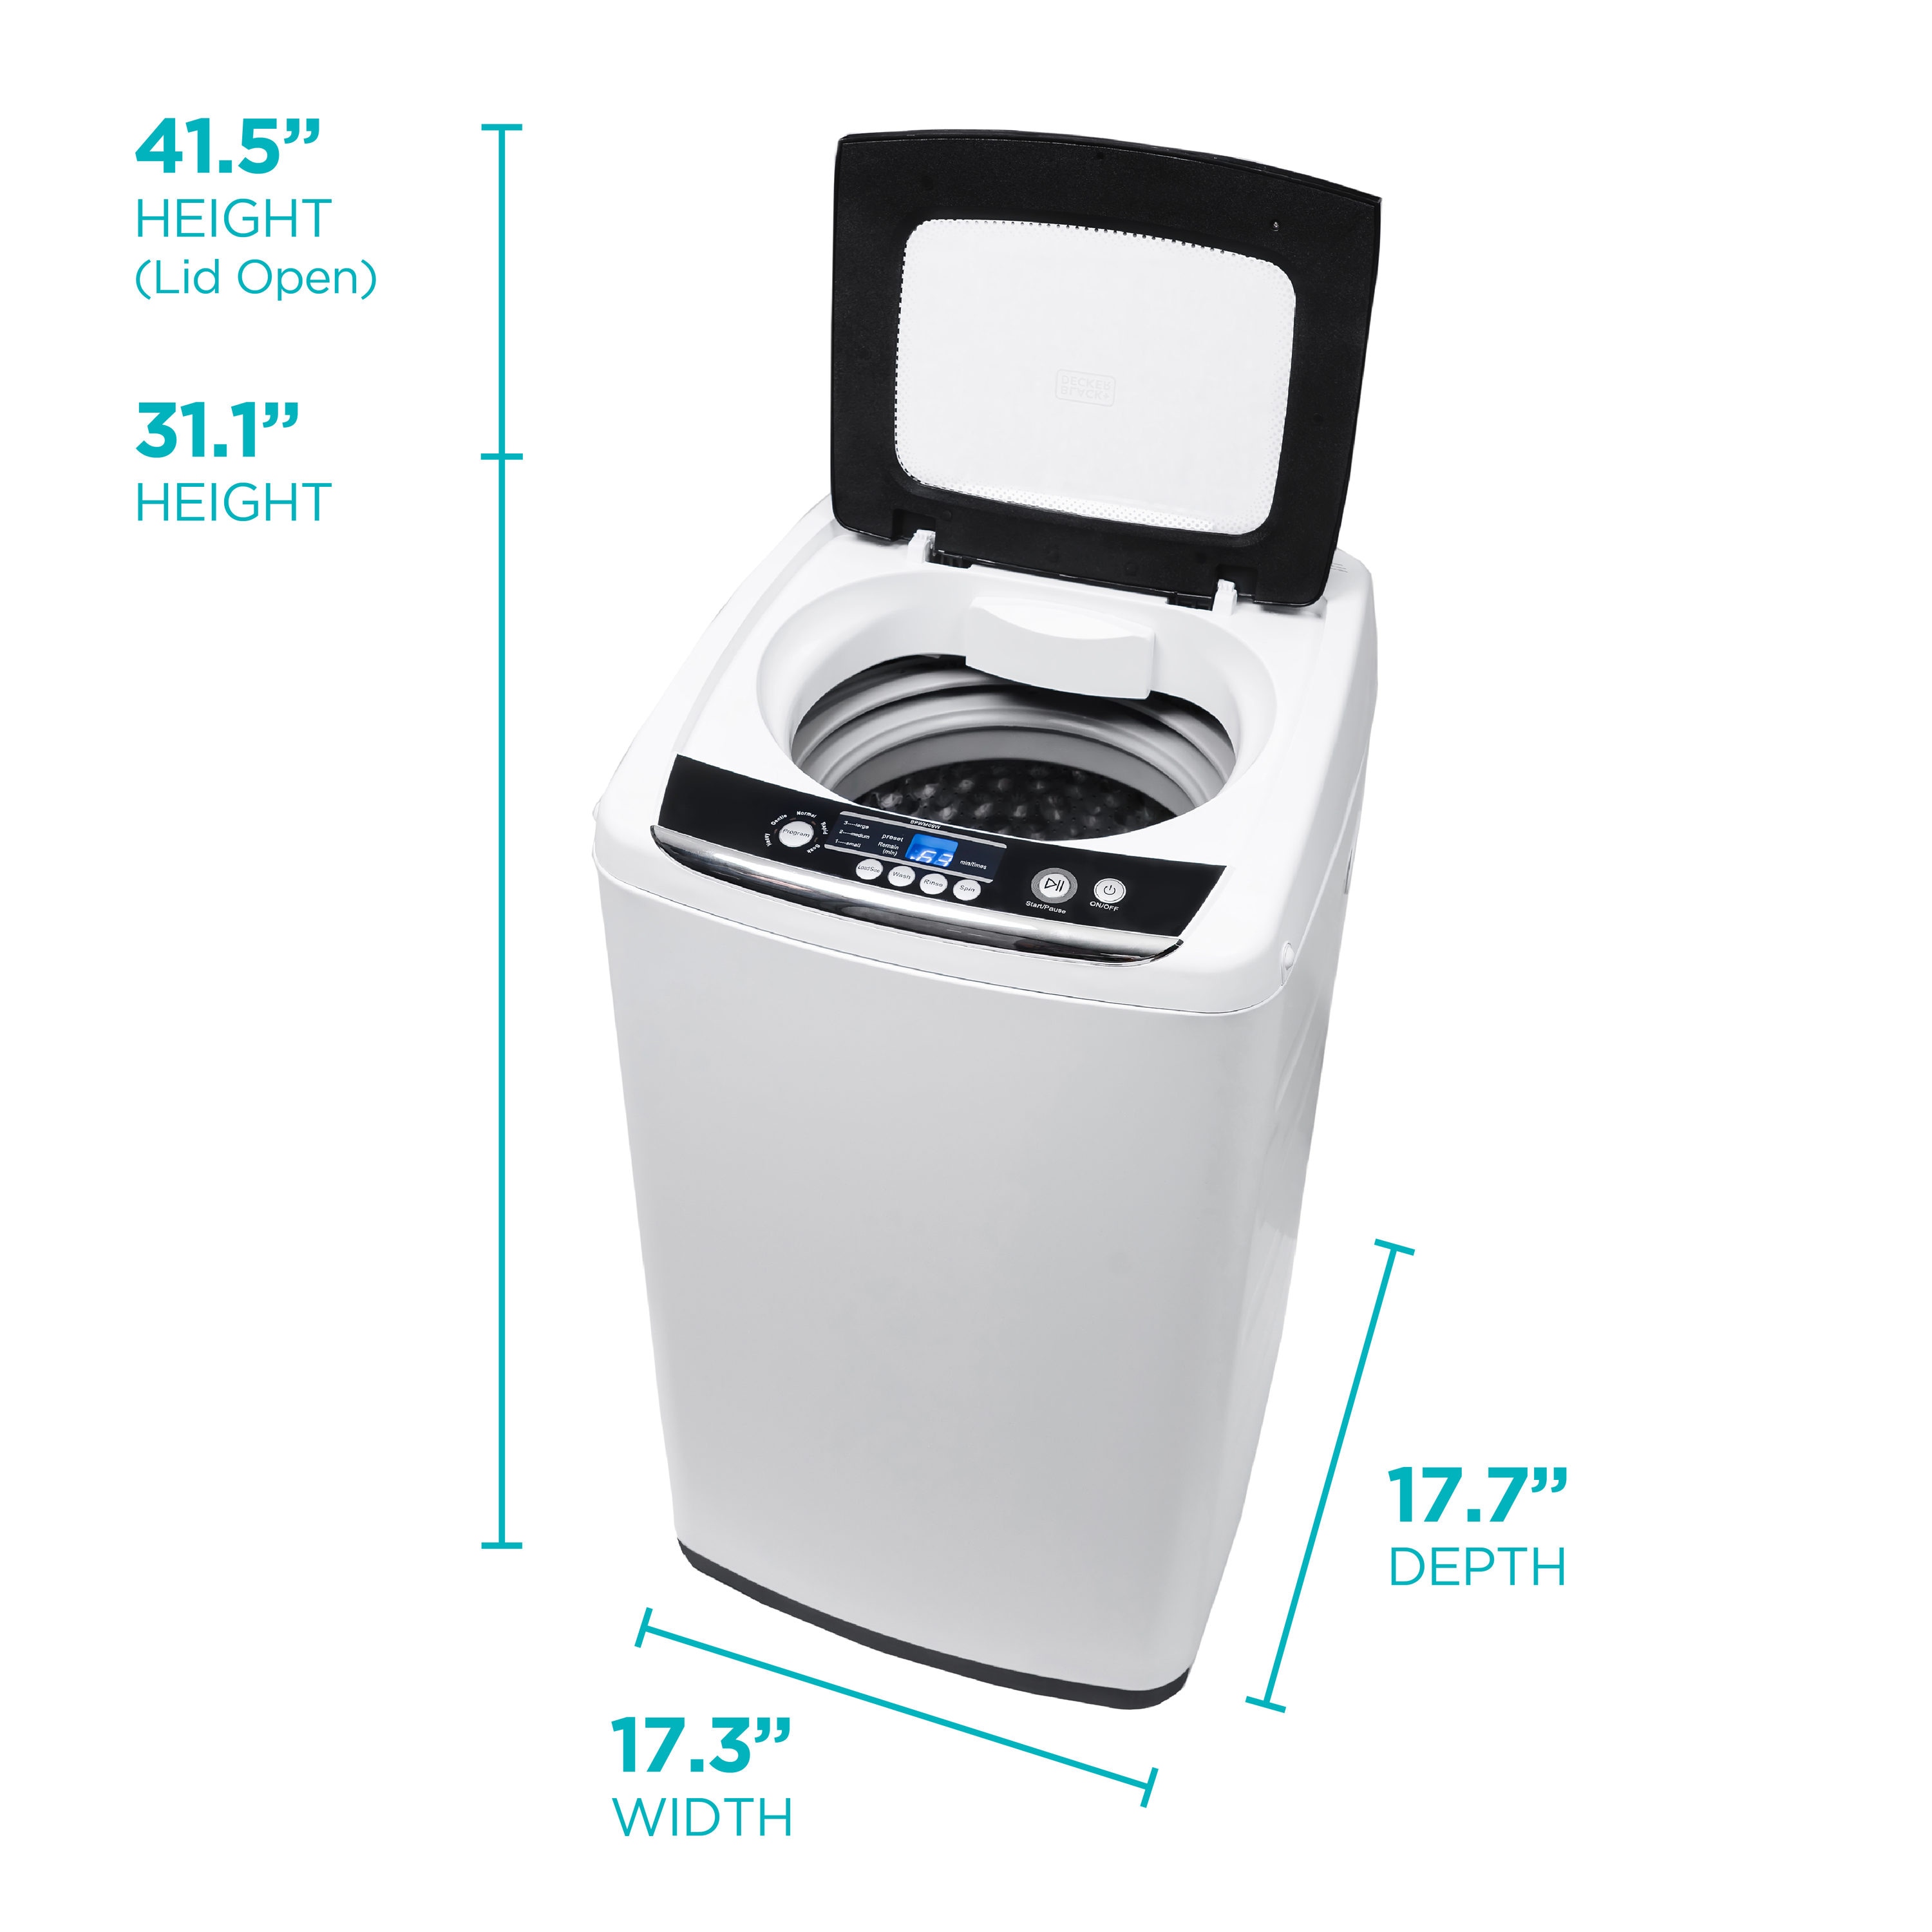 Black + Decker BPWM09W Portable Washing Machine Review 2021 